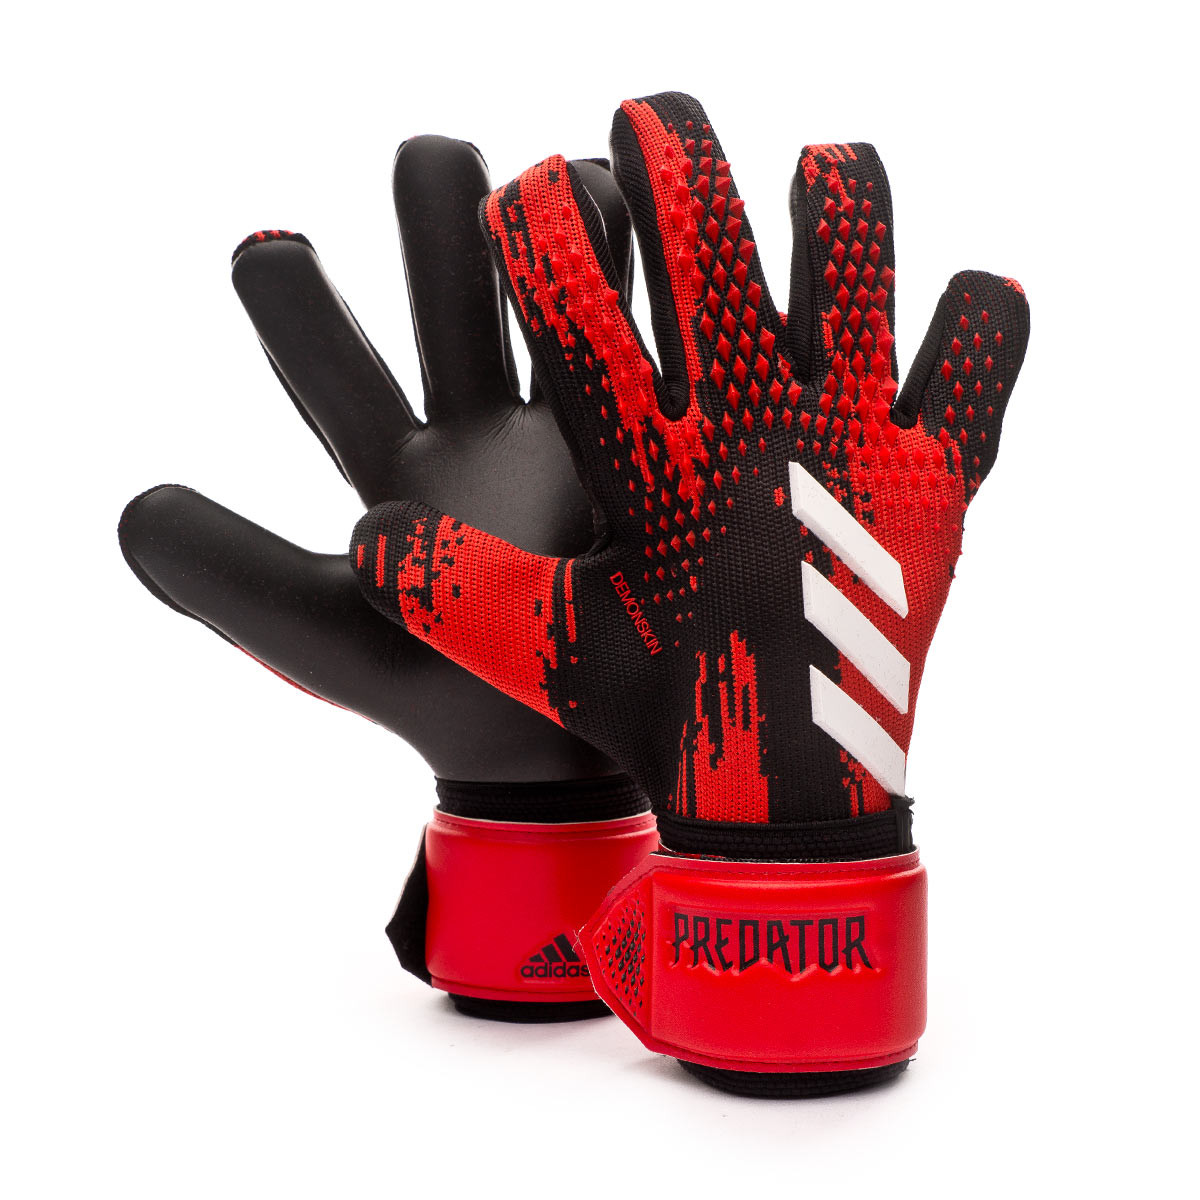 adidas predator football gloves